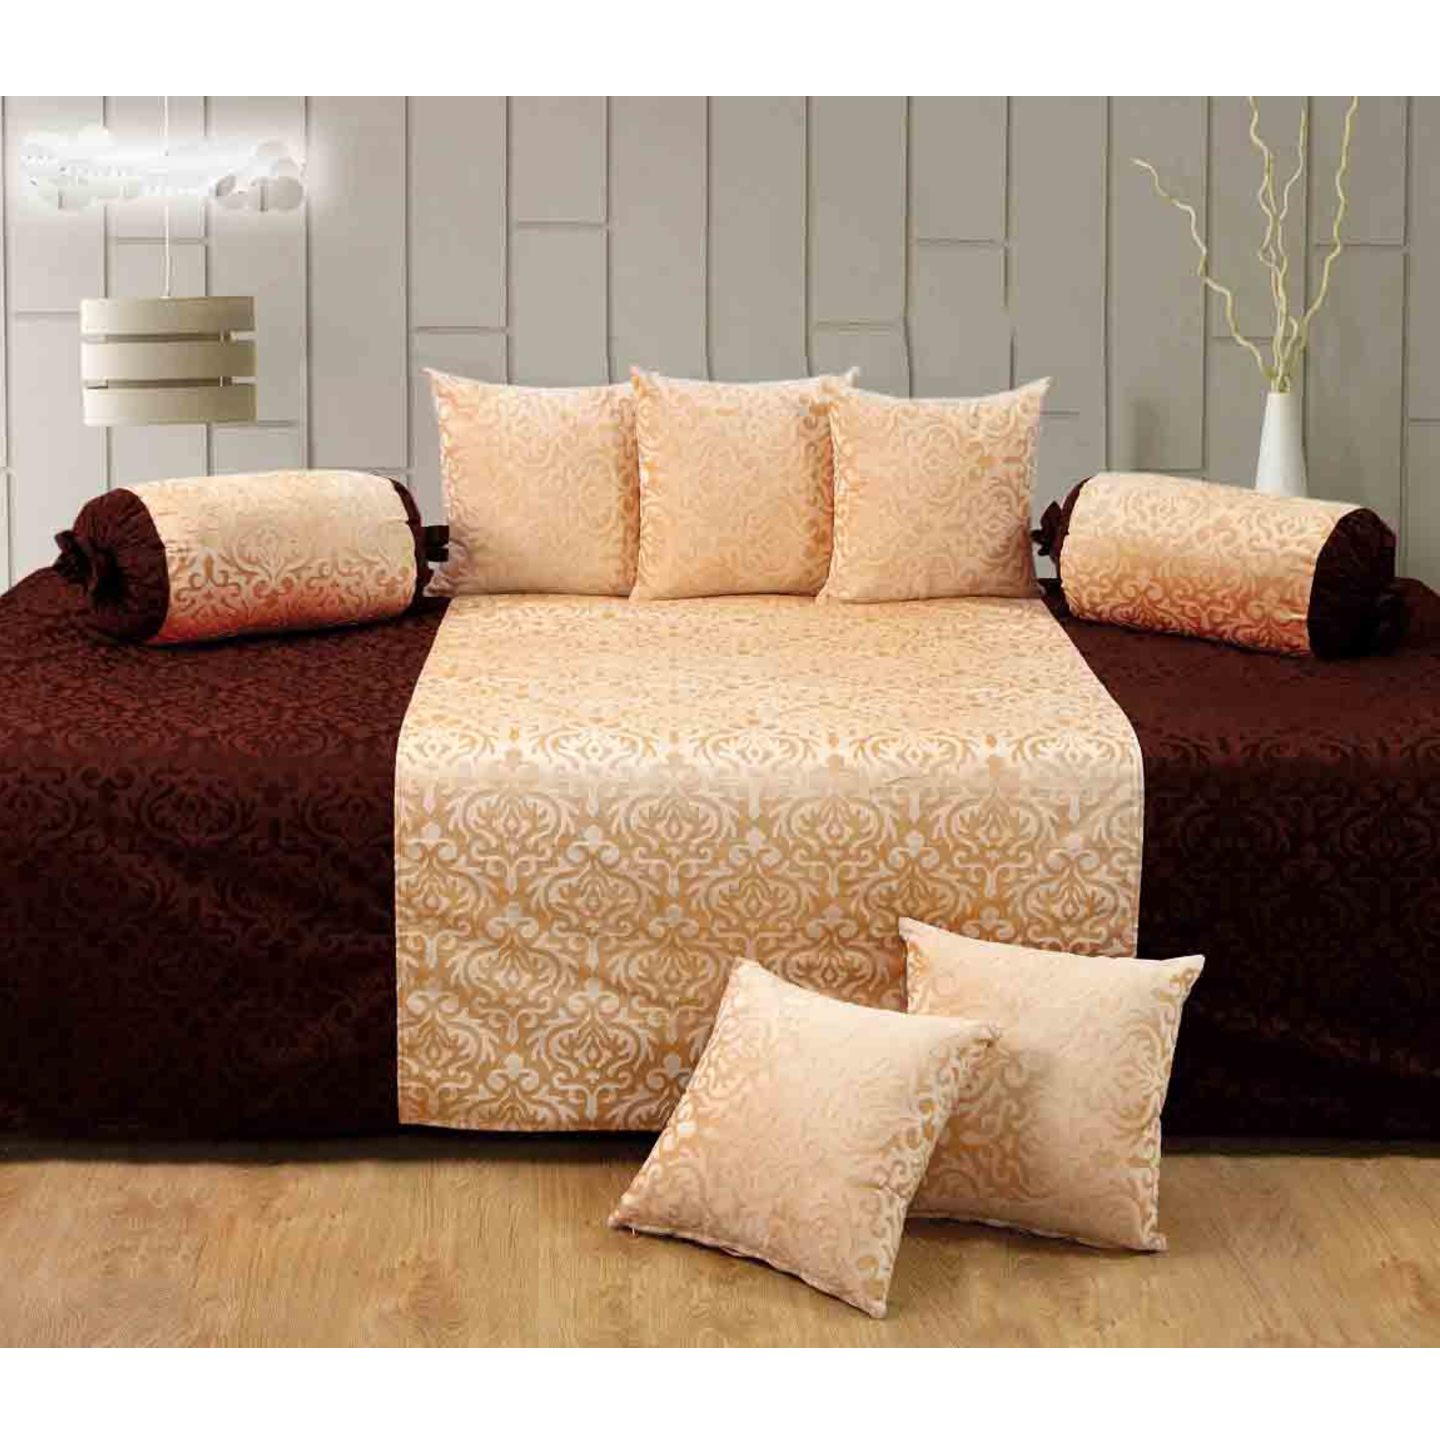 Velvet Diwan Setcontent 1 Single Bed Sheet, 5 Cushion Cover, 2 Bolster, Total - 8 Pcs Set, Exclusive Design